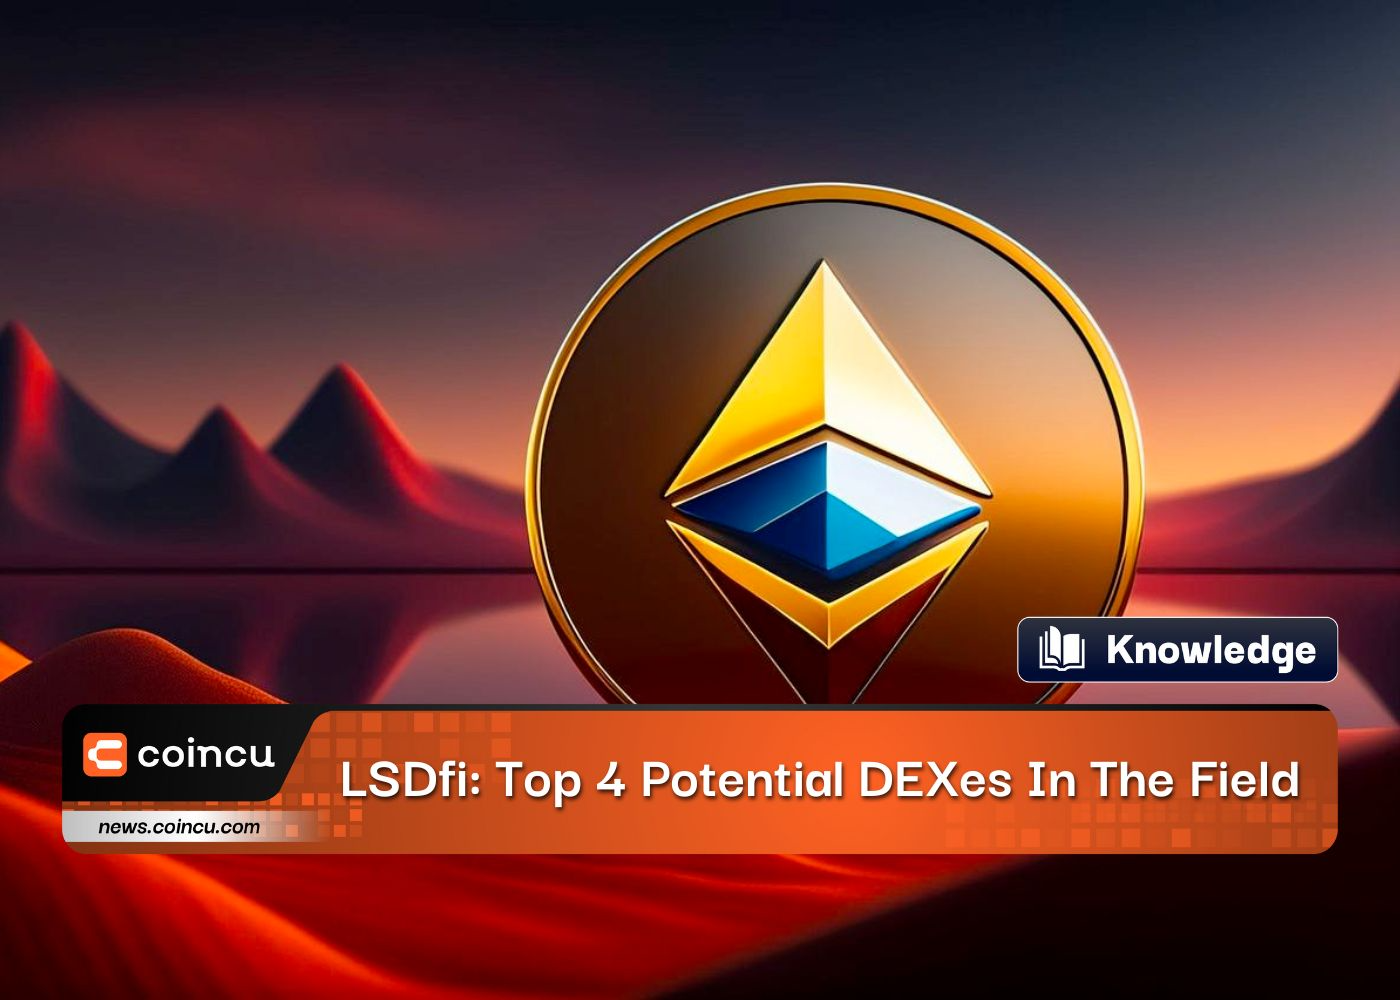 LSDfi: Top 4 Potential DEXes In The Field